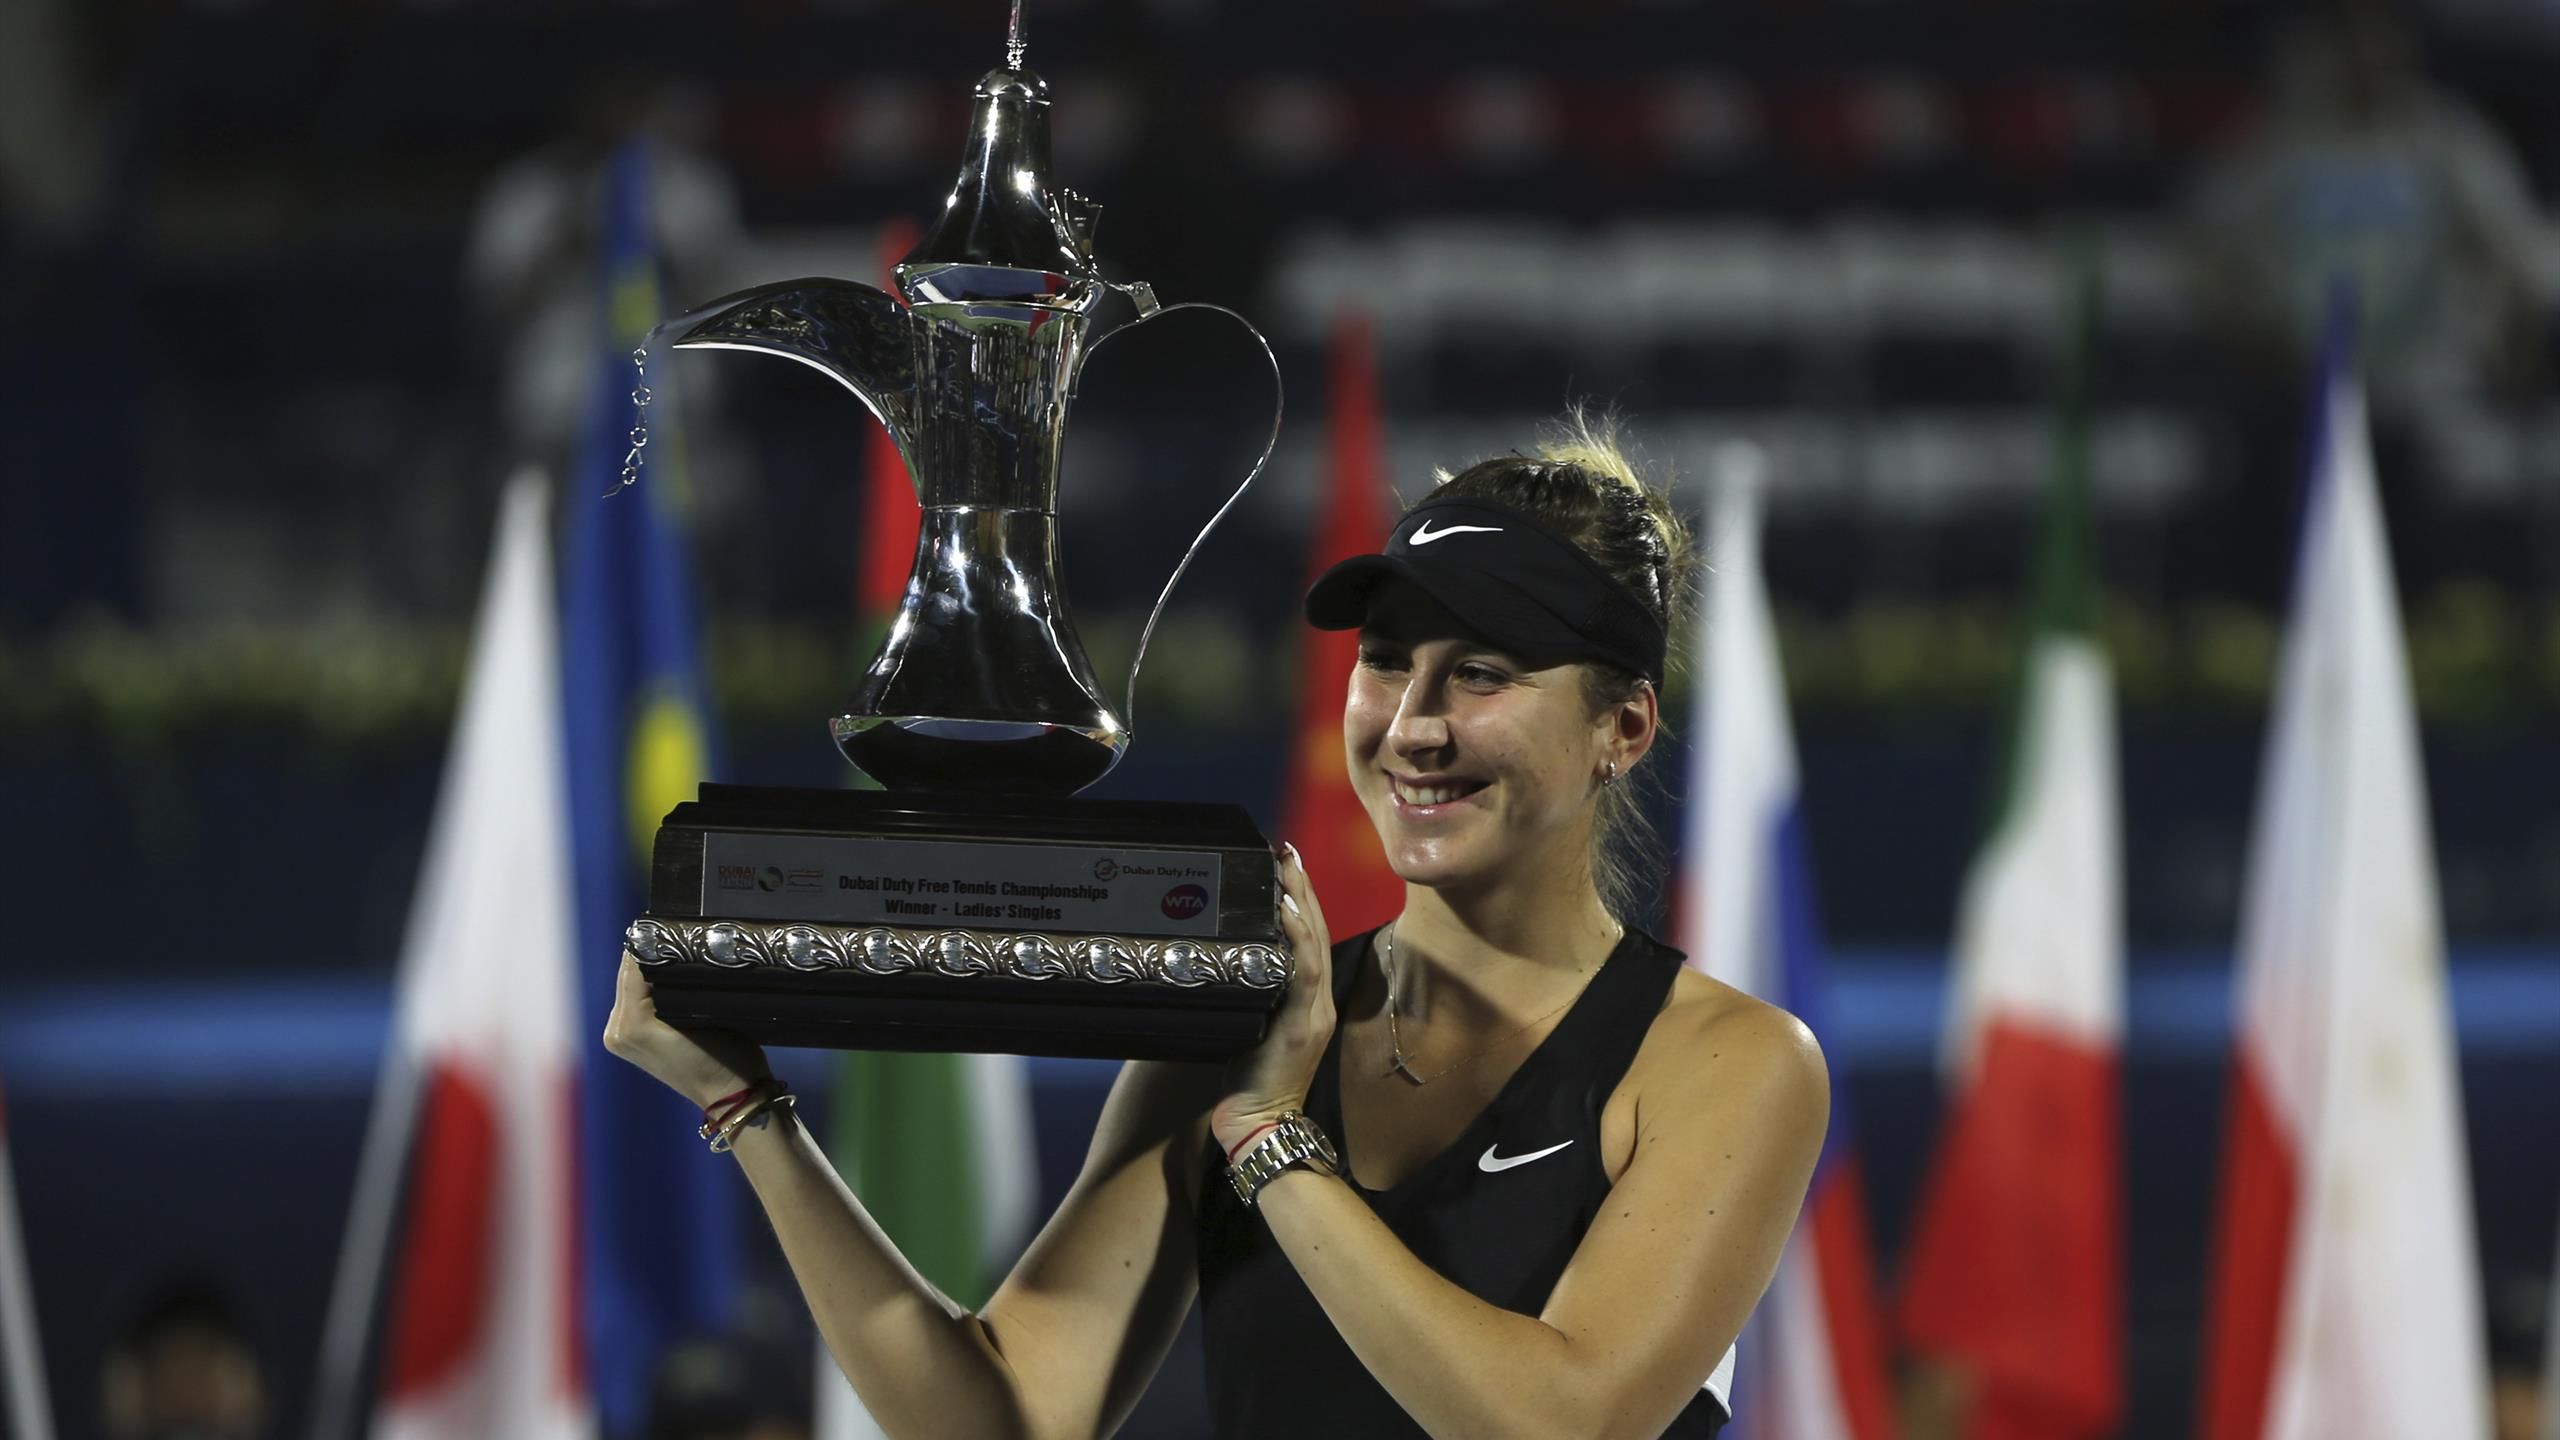 Photos: WTA Draw Ceremony - Dubai Duty Free Tennis Championships